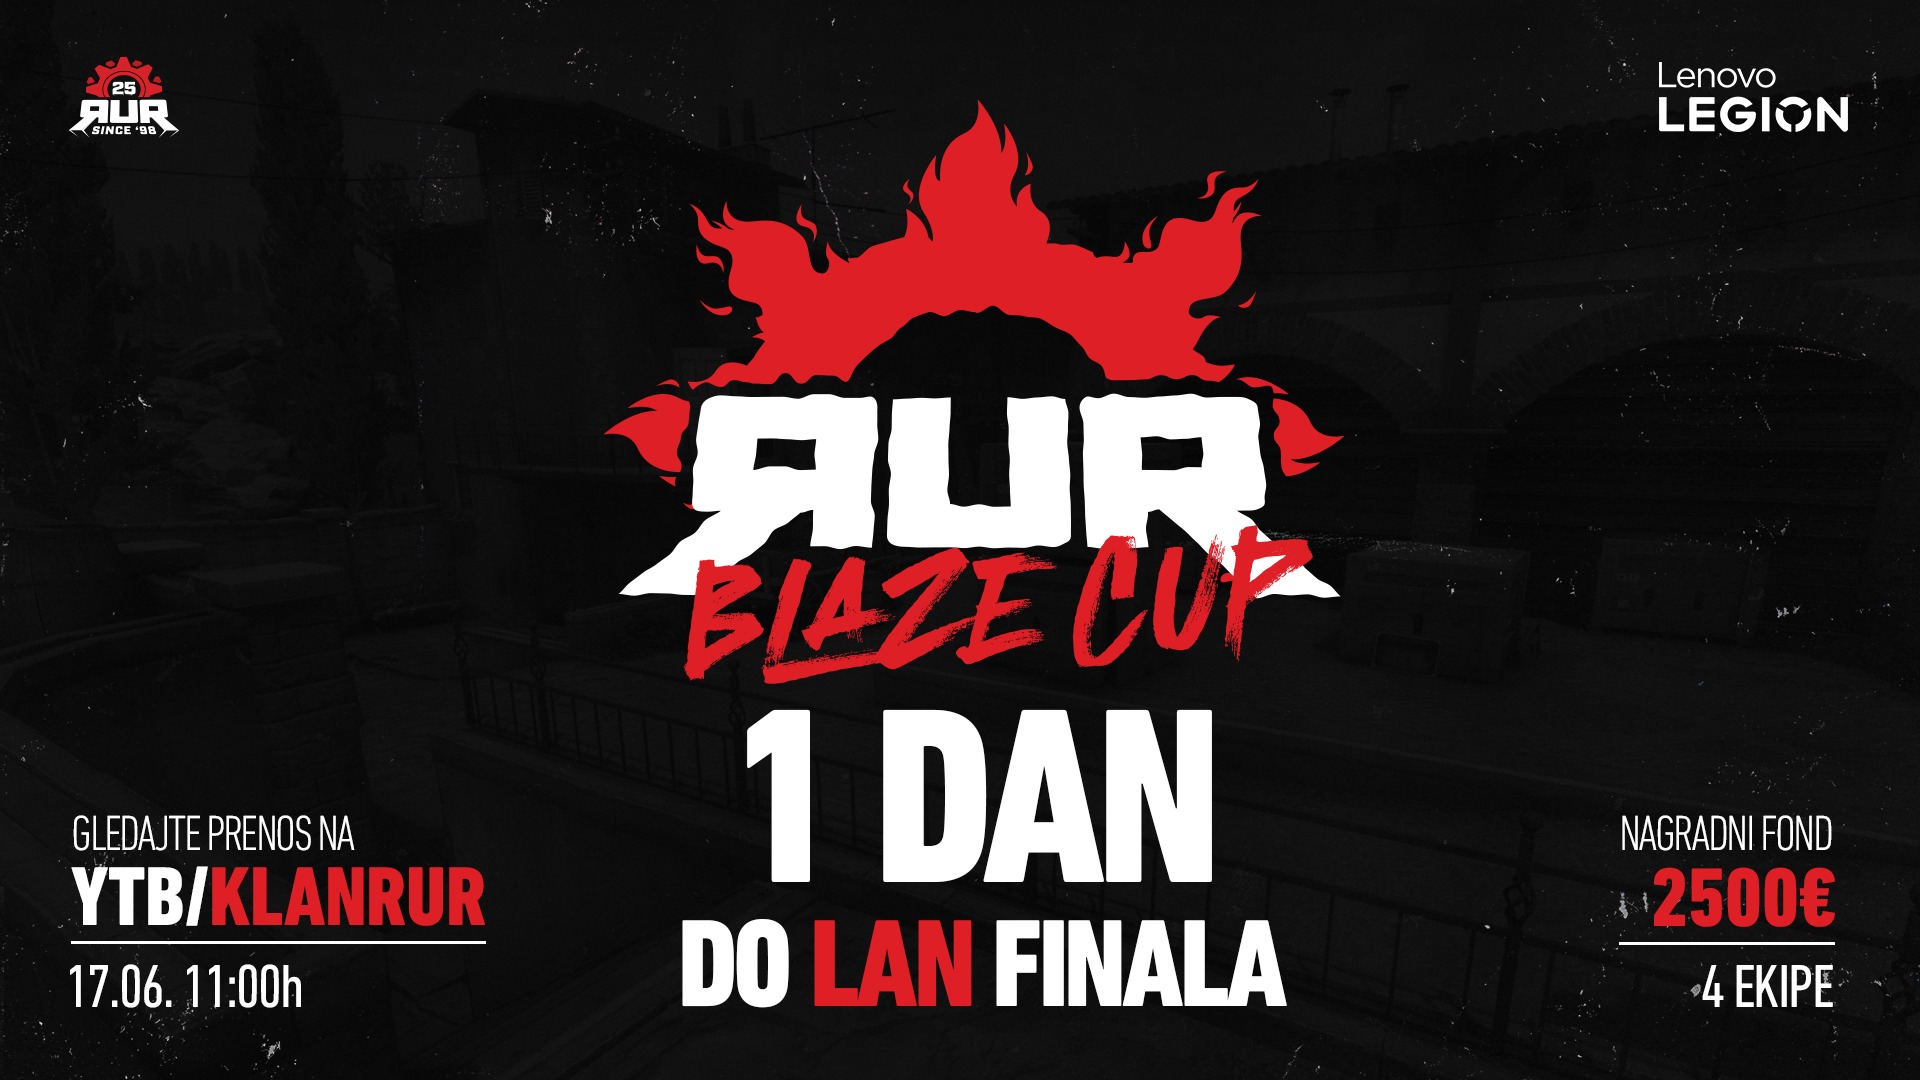 Blaze-cup-lan-finals2023-1day